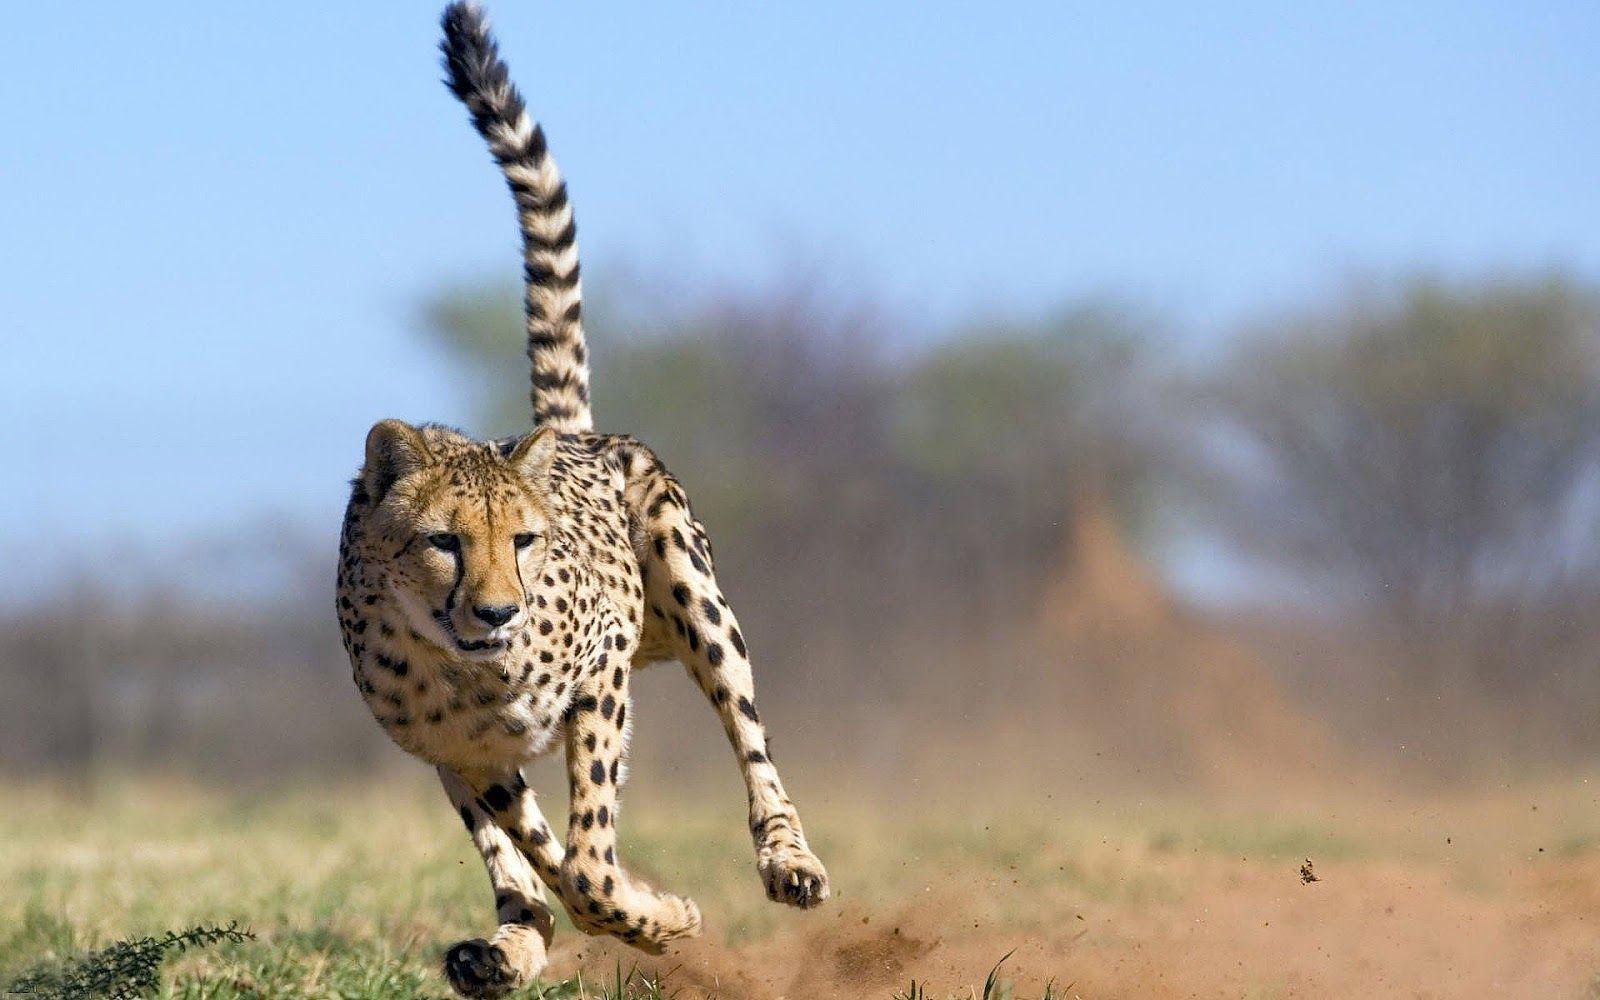 Fast running attacking cheetah